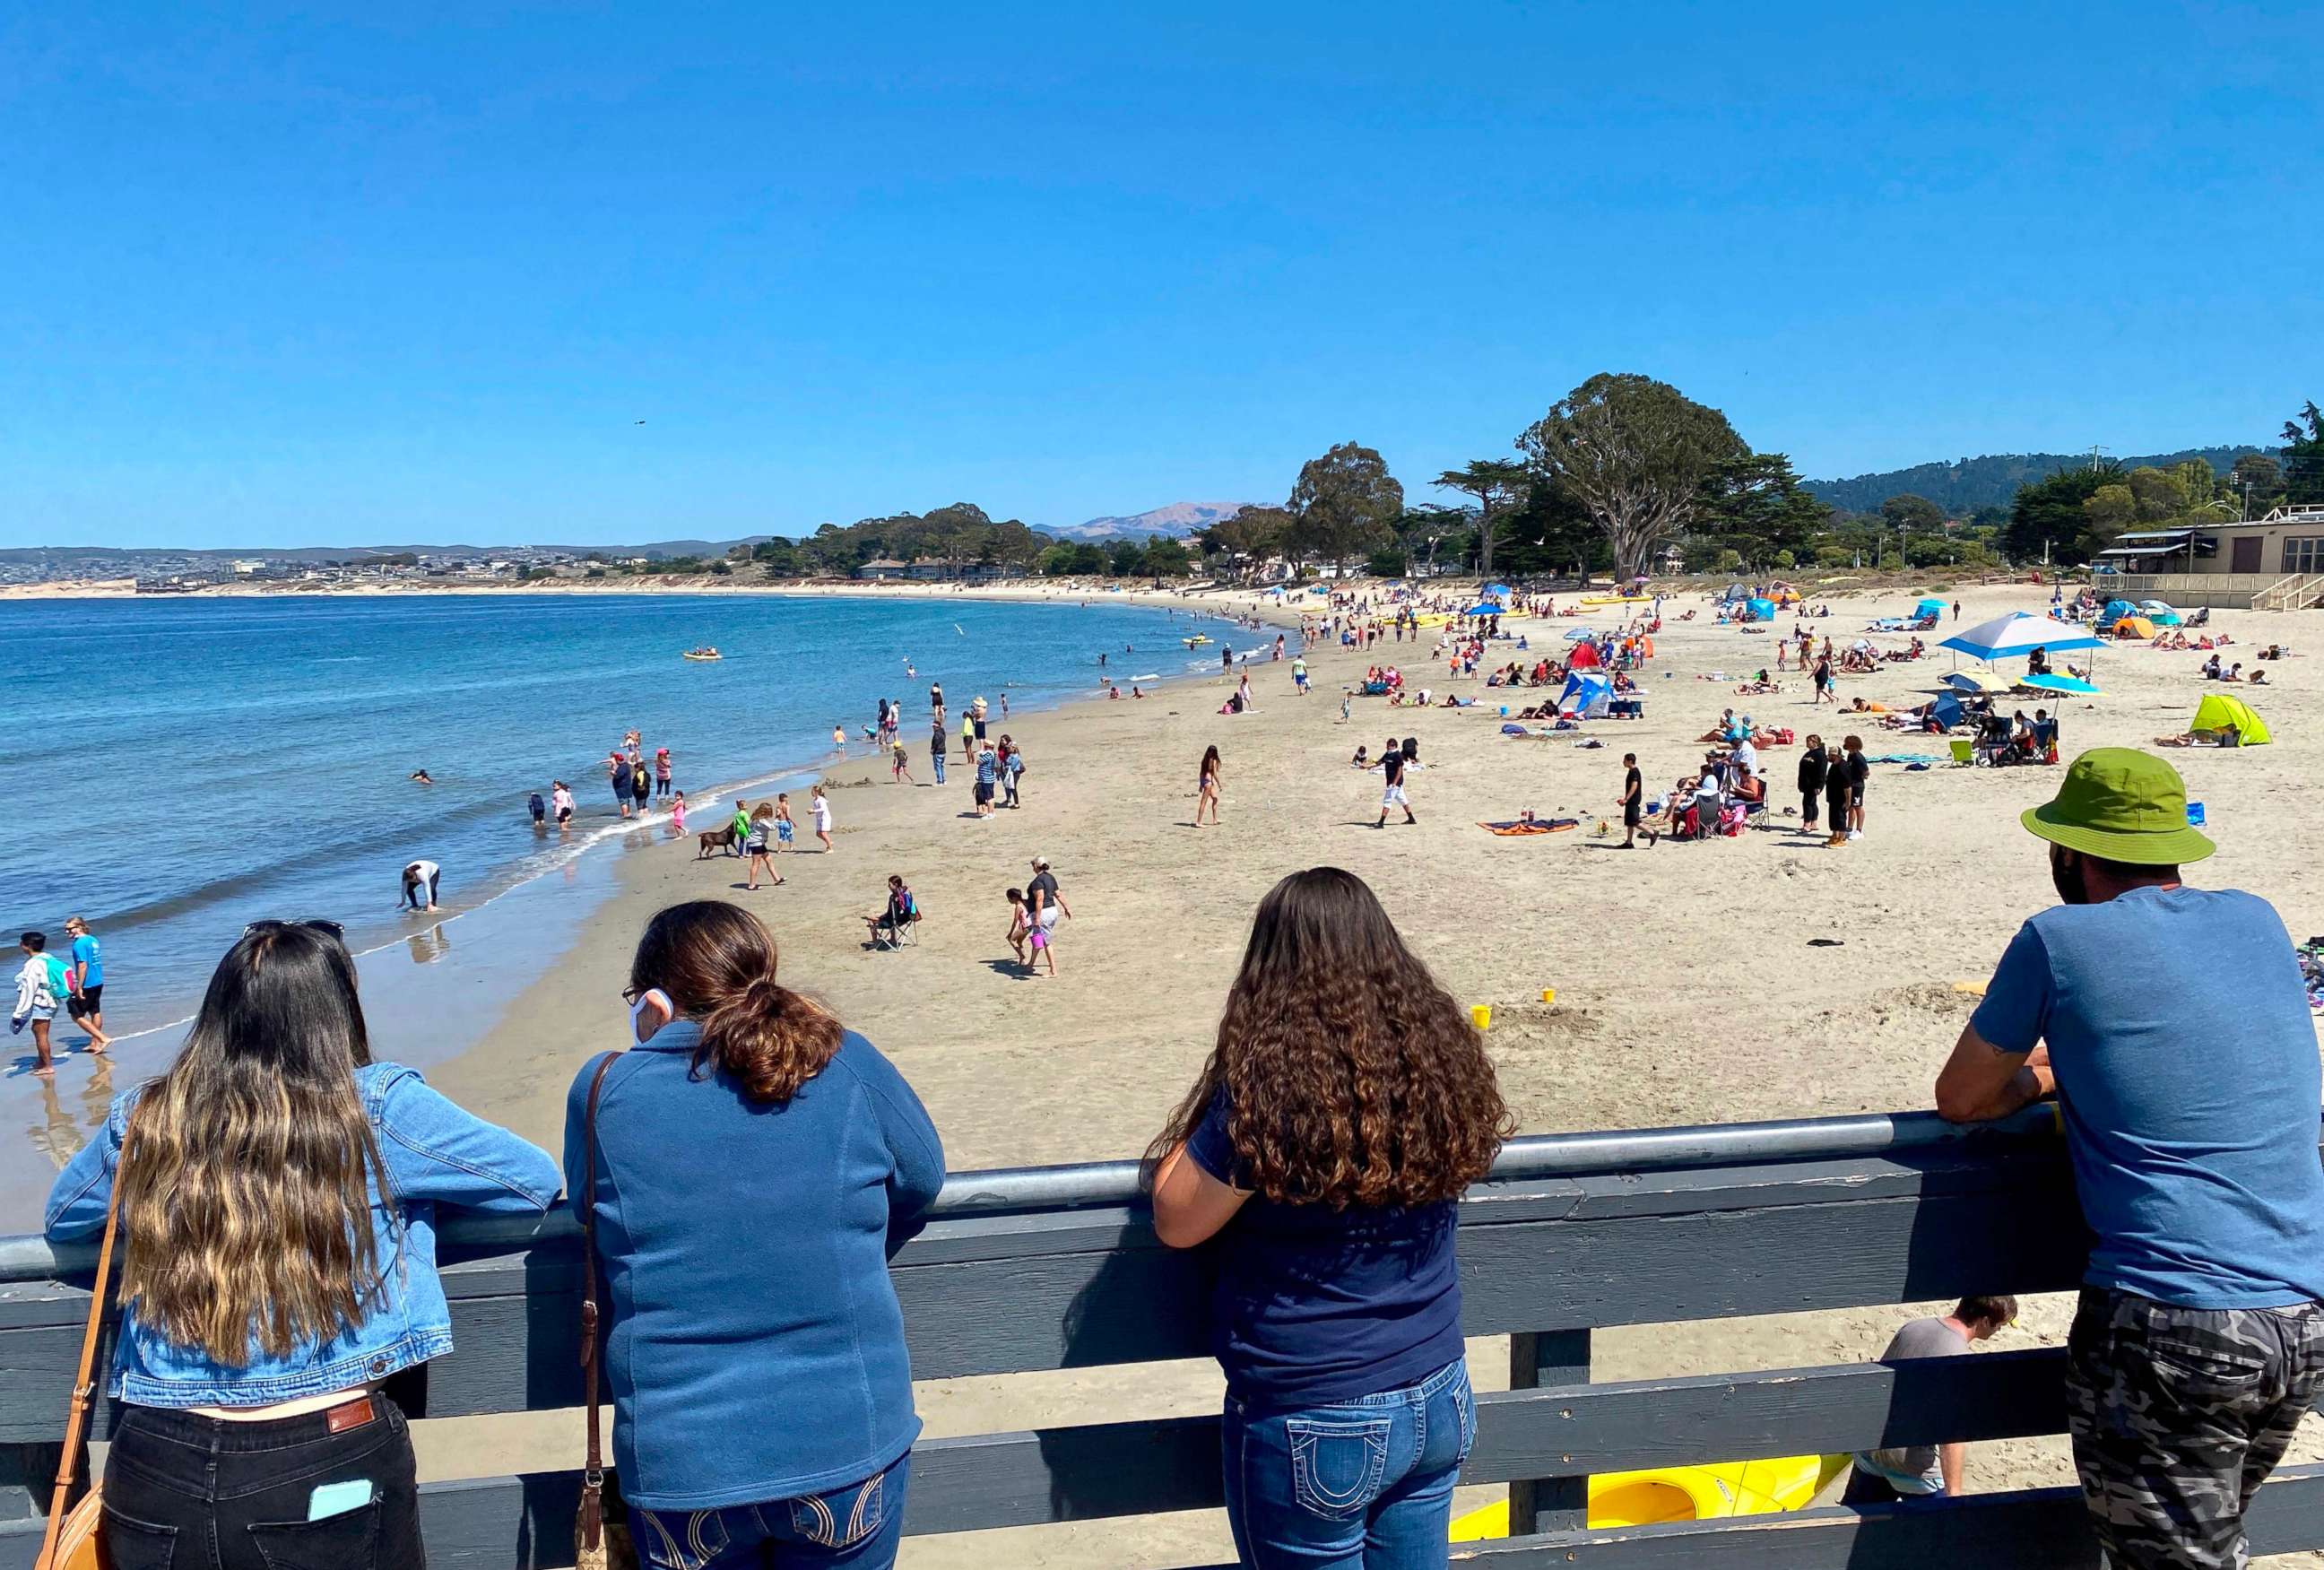 PHOTO: Sunbathers enjoy the Fisherman's Warf beach in Monterey, California, Aug. 1, 2020, amid the Coronavirus outbreak. 